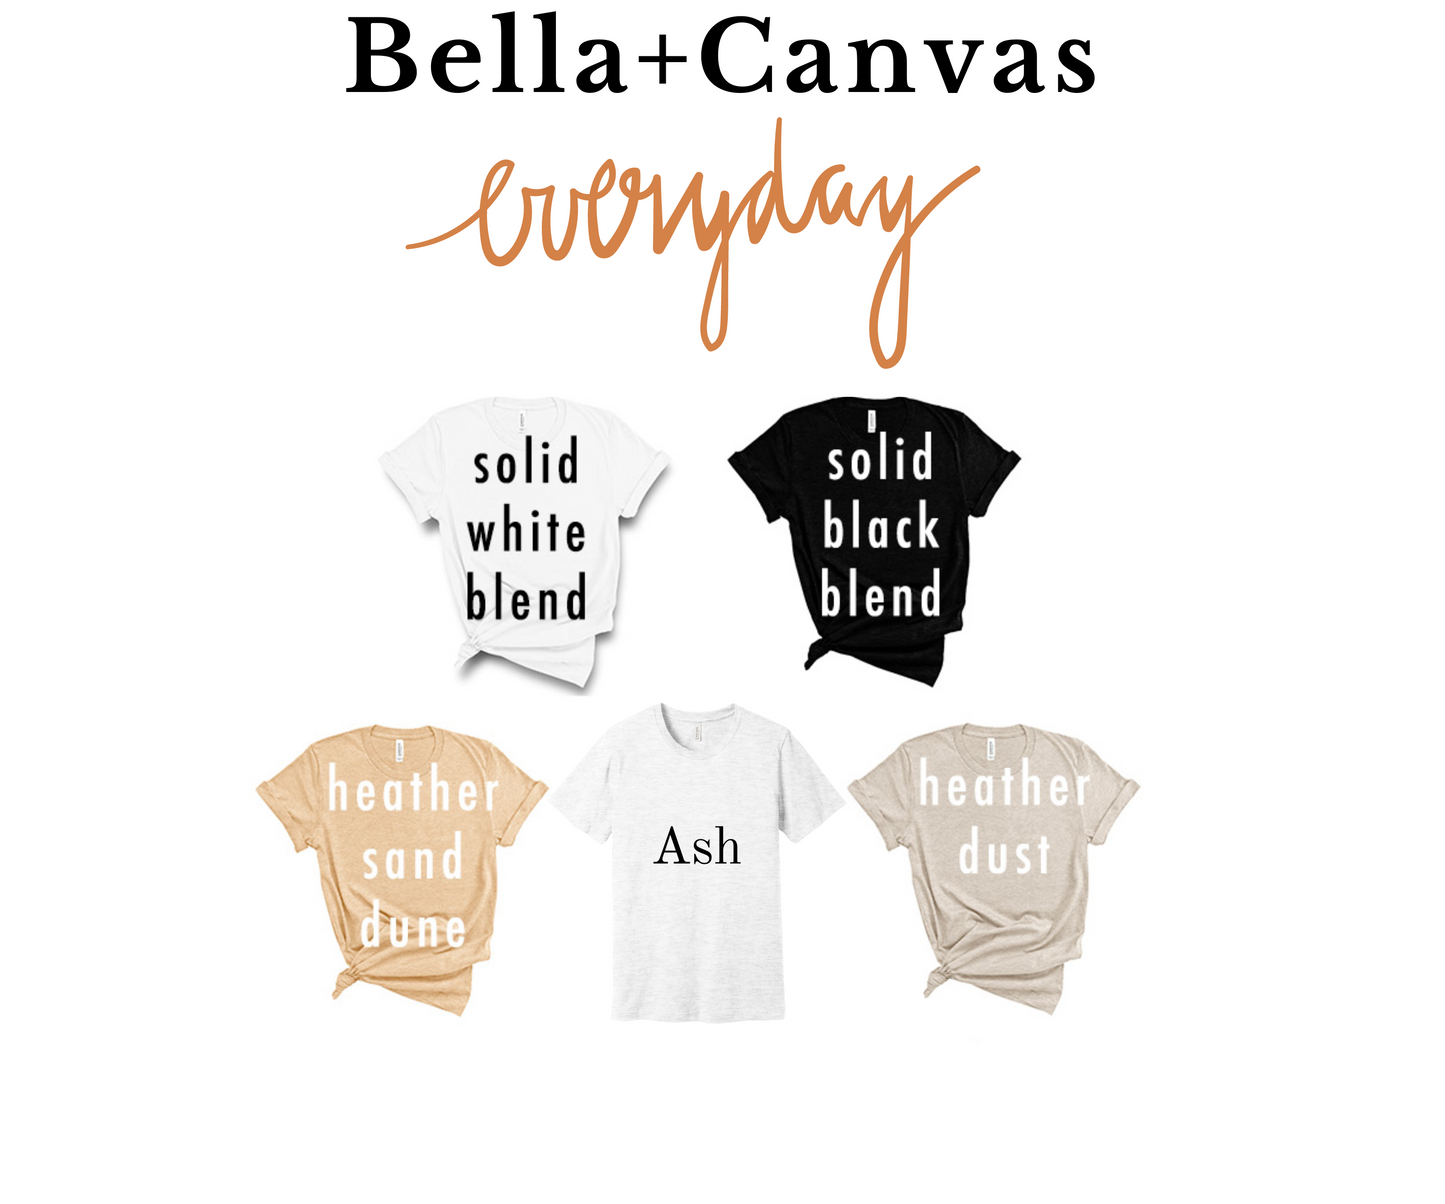 Dancing Skeletons Bella Canvas T-shirt